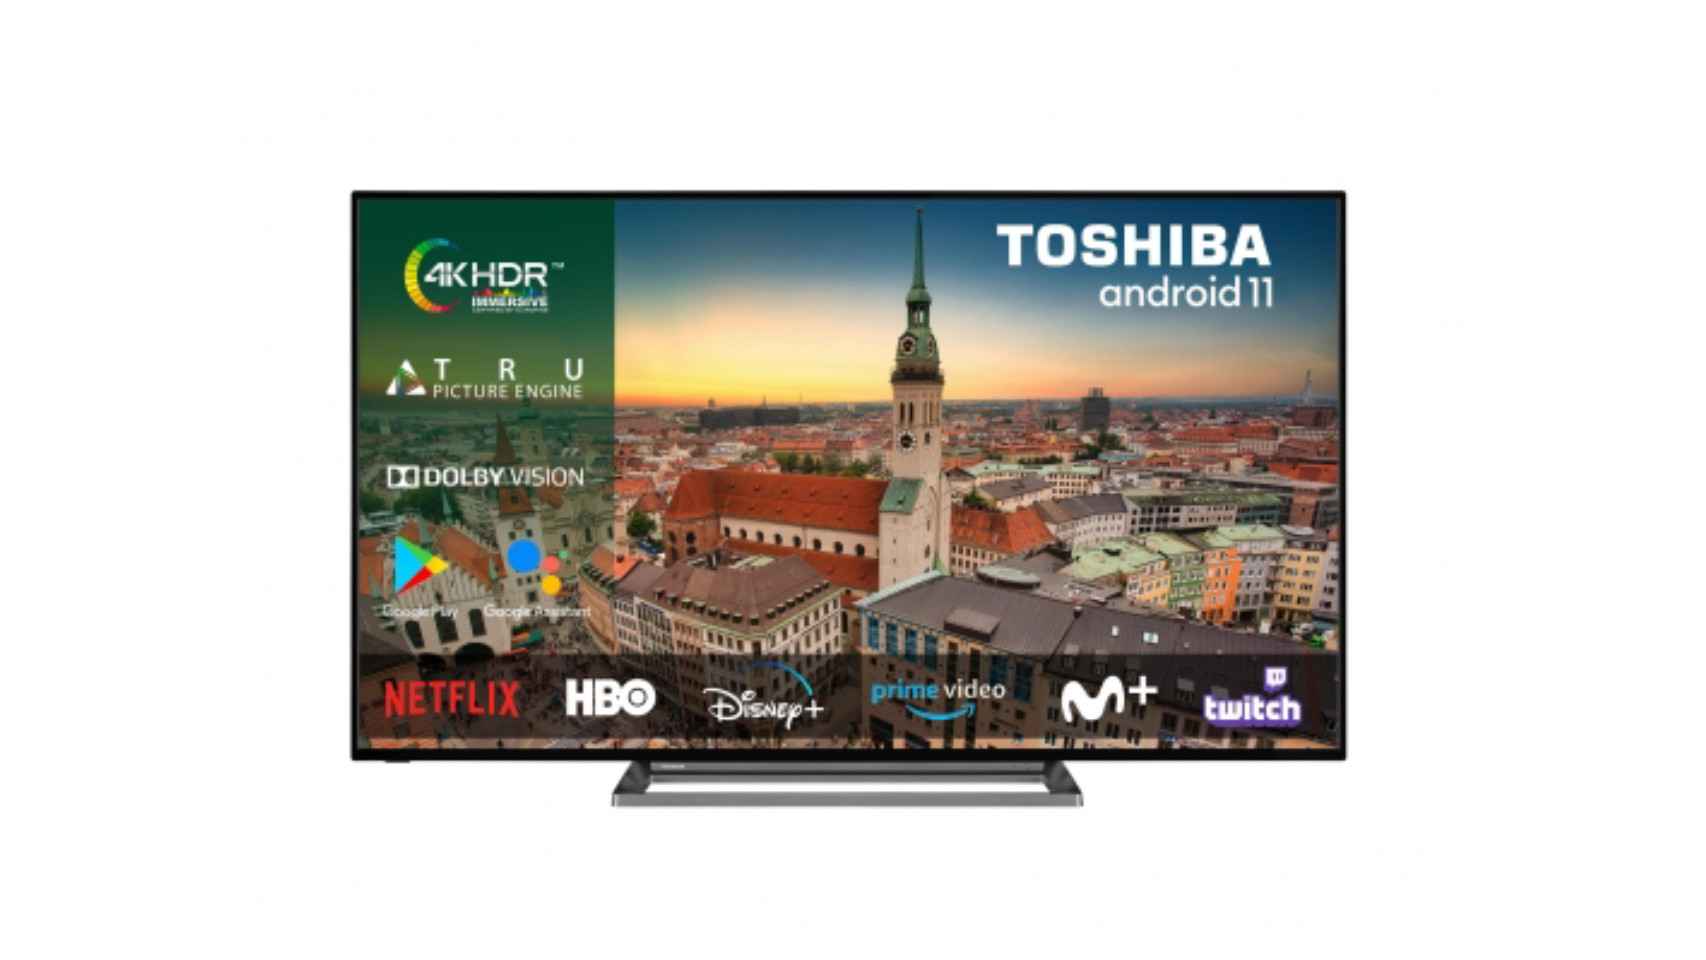 El televisor de 65 pulgadas de Toshiba que vende Carrefour.